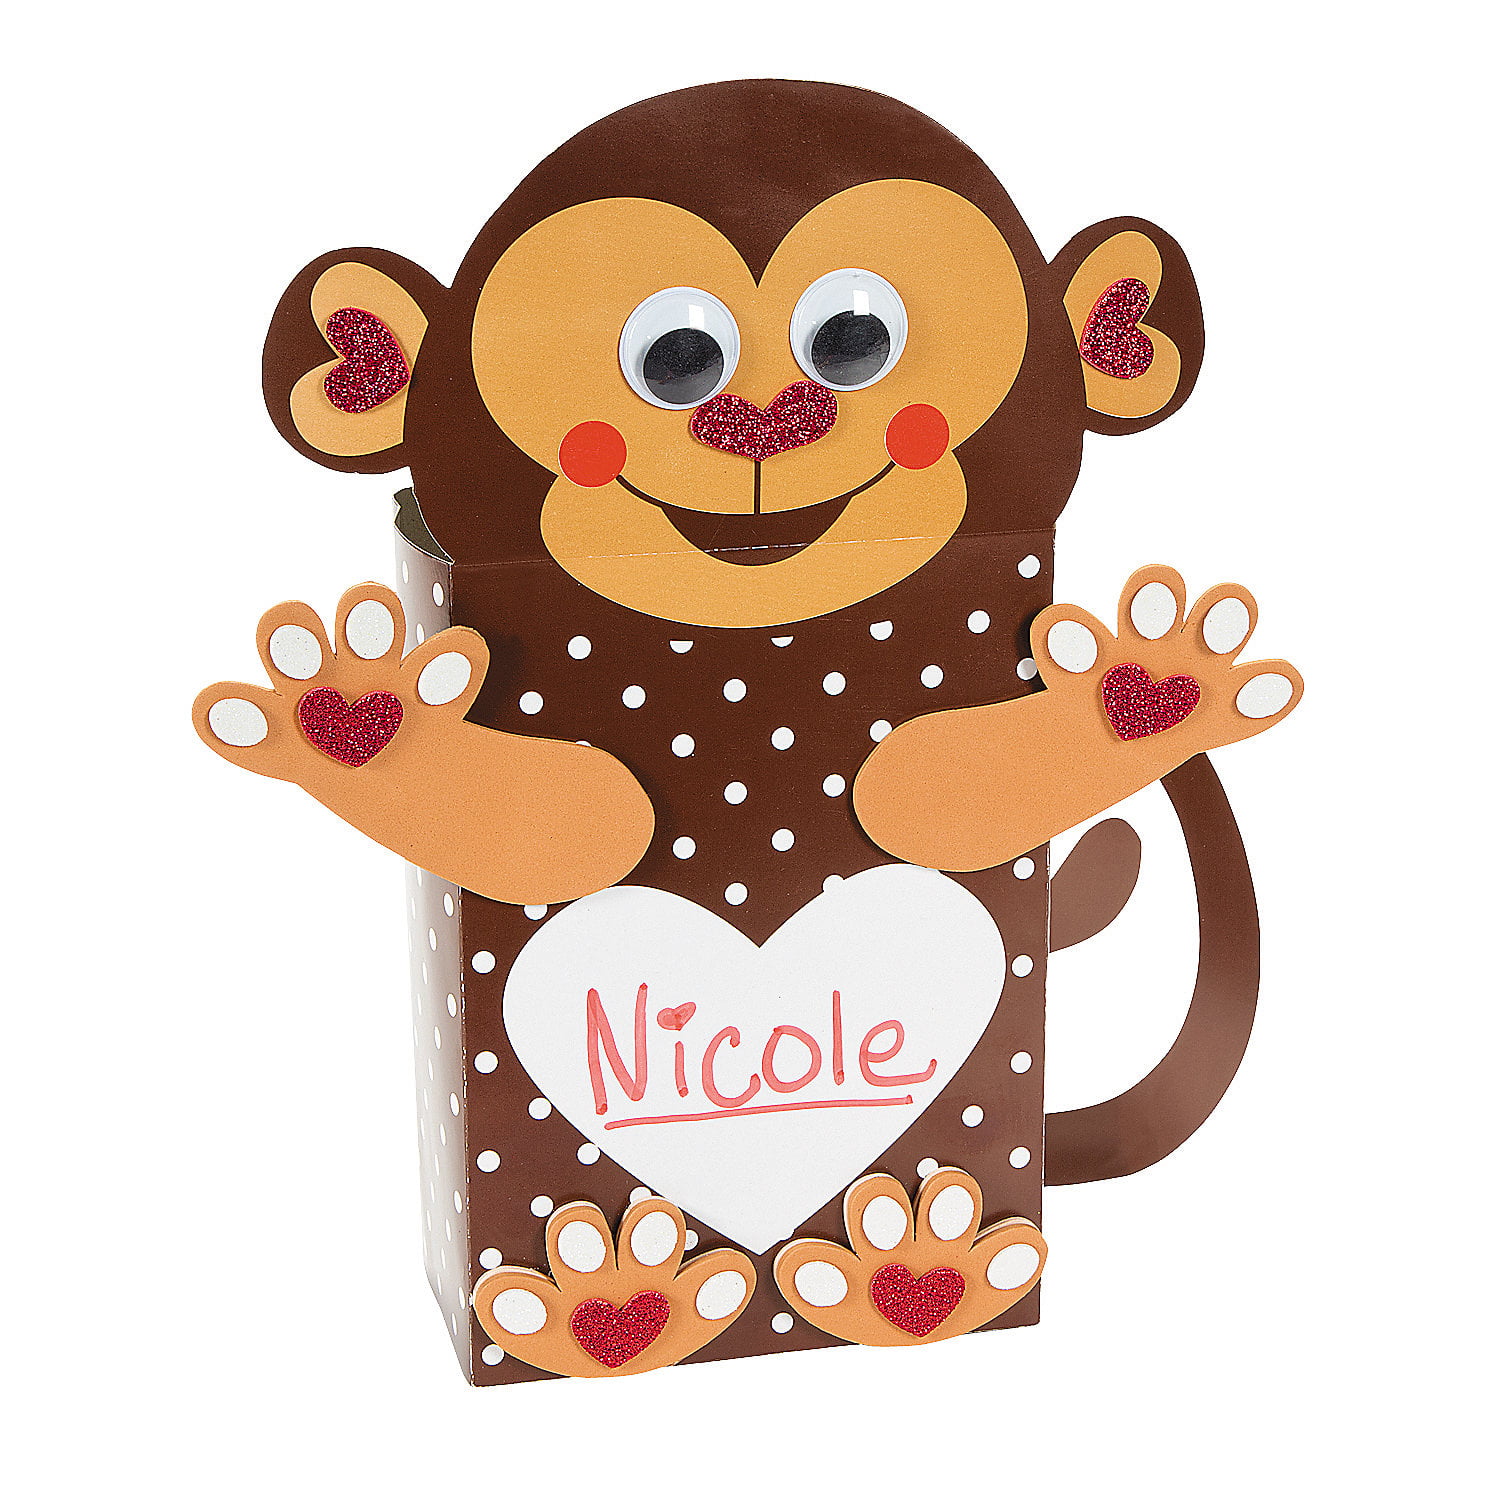 Second Life Marketplace - Valentine's Day Monkey - Be Mine